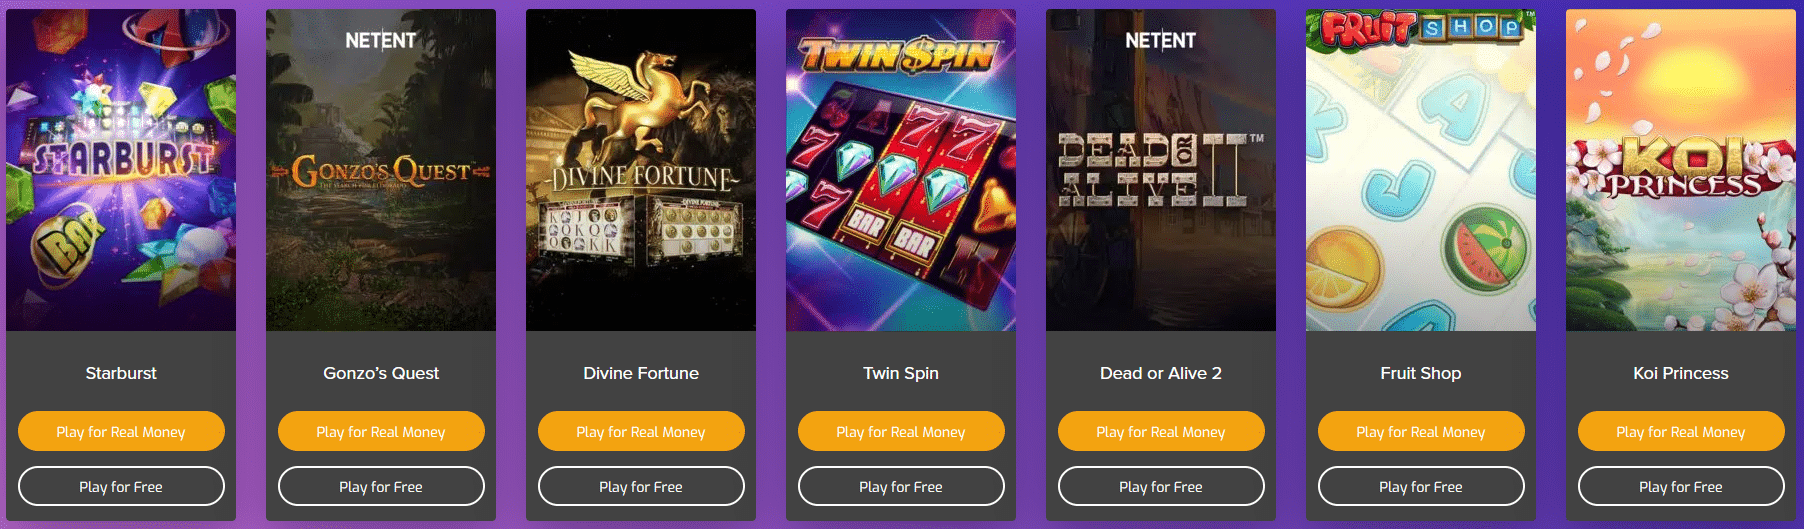 NetEnt-Live-Casino